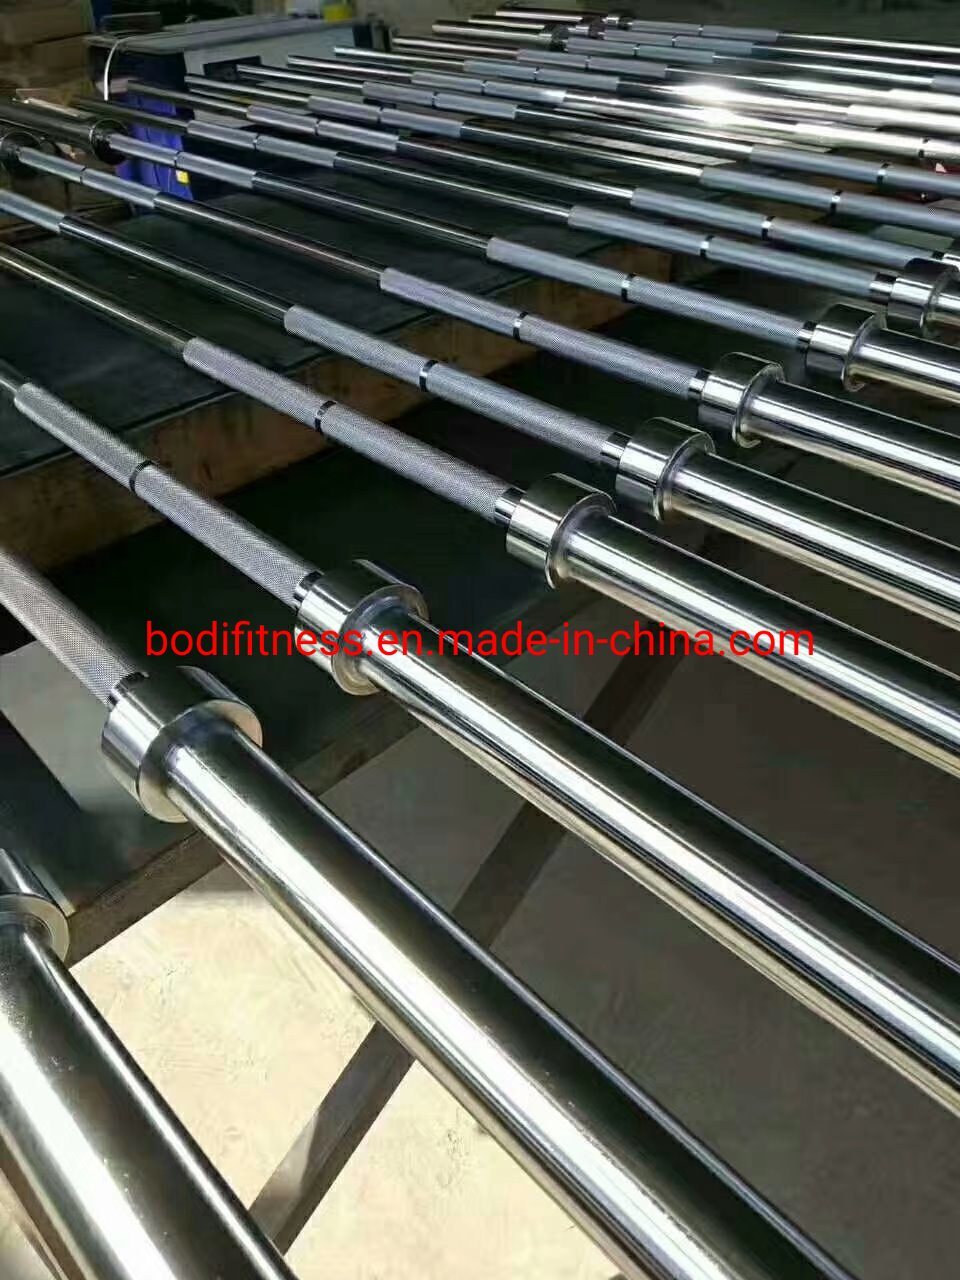 Hard Chrome Steel Gym Barbell Weight Lifting Ez Curl Bar